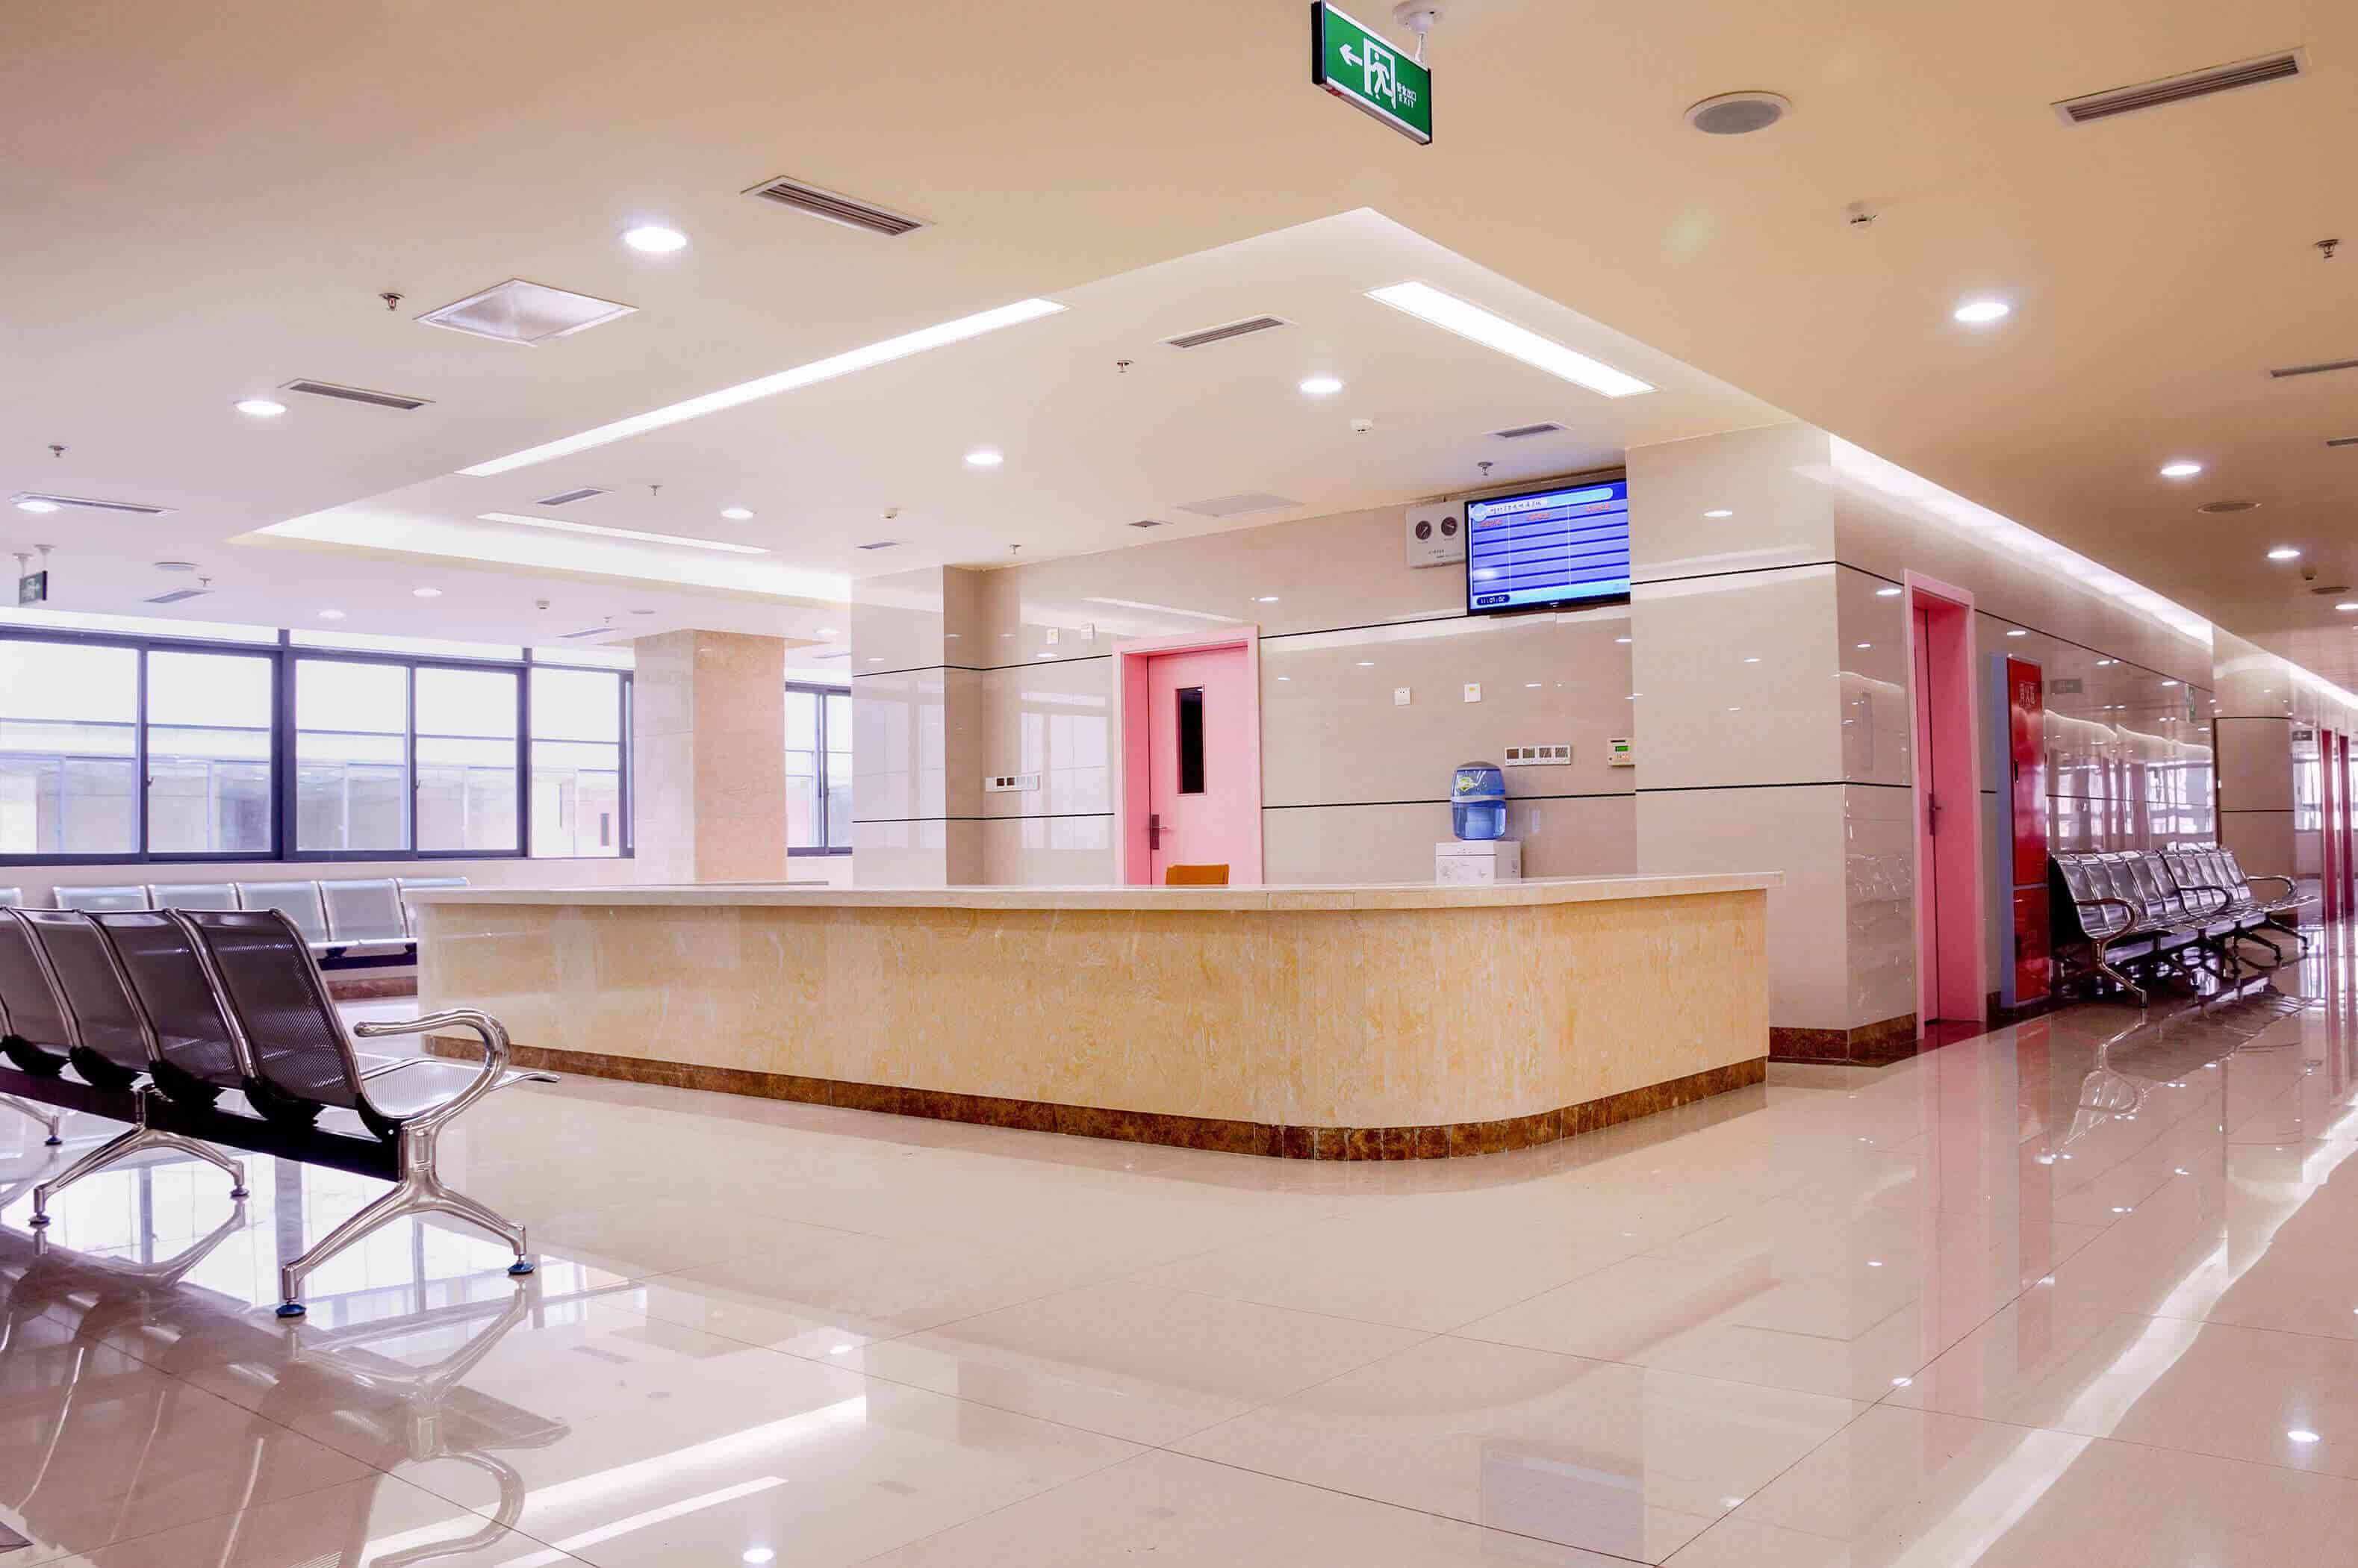 Hospital Interior